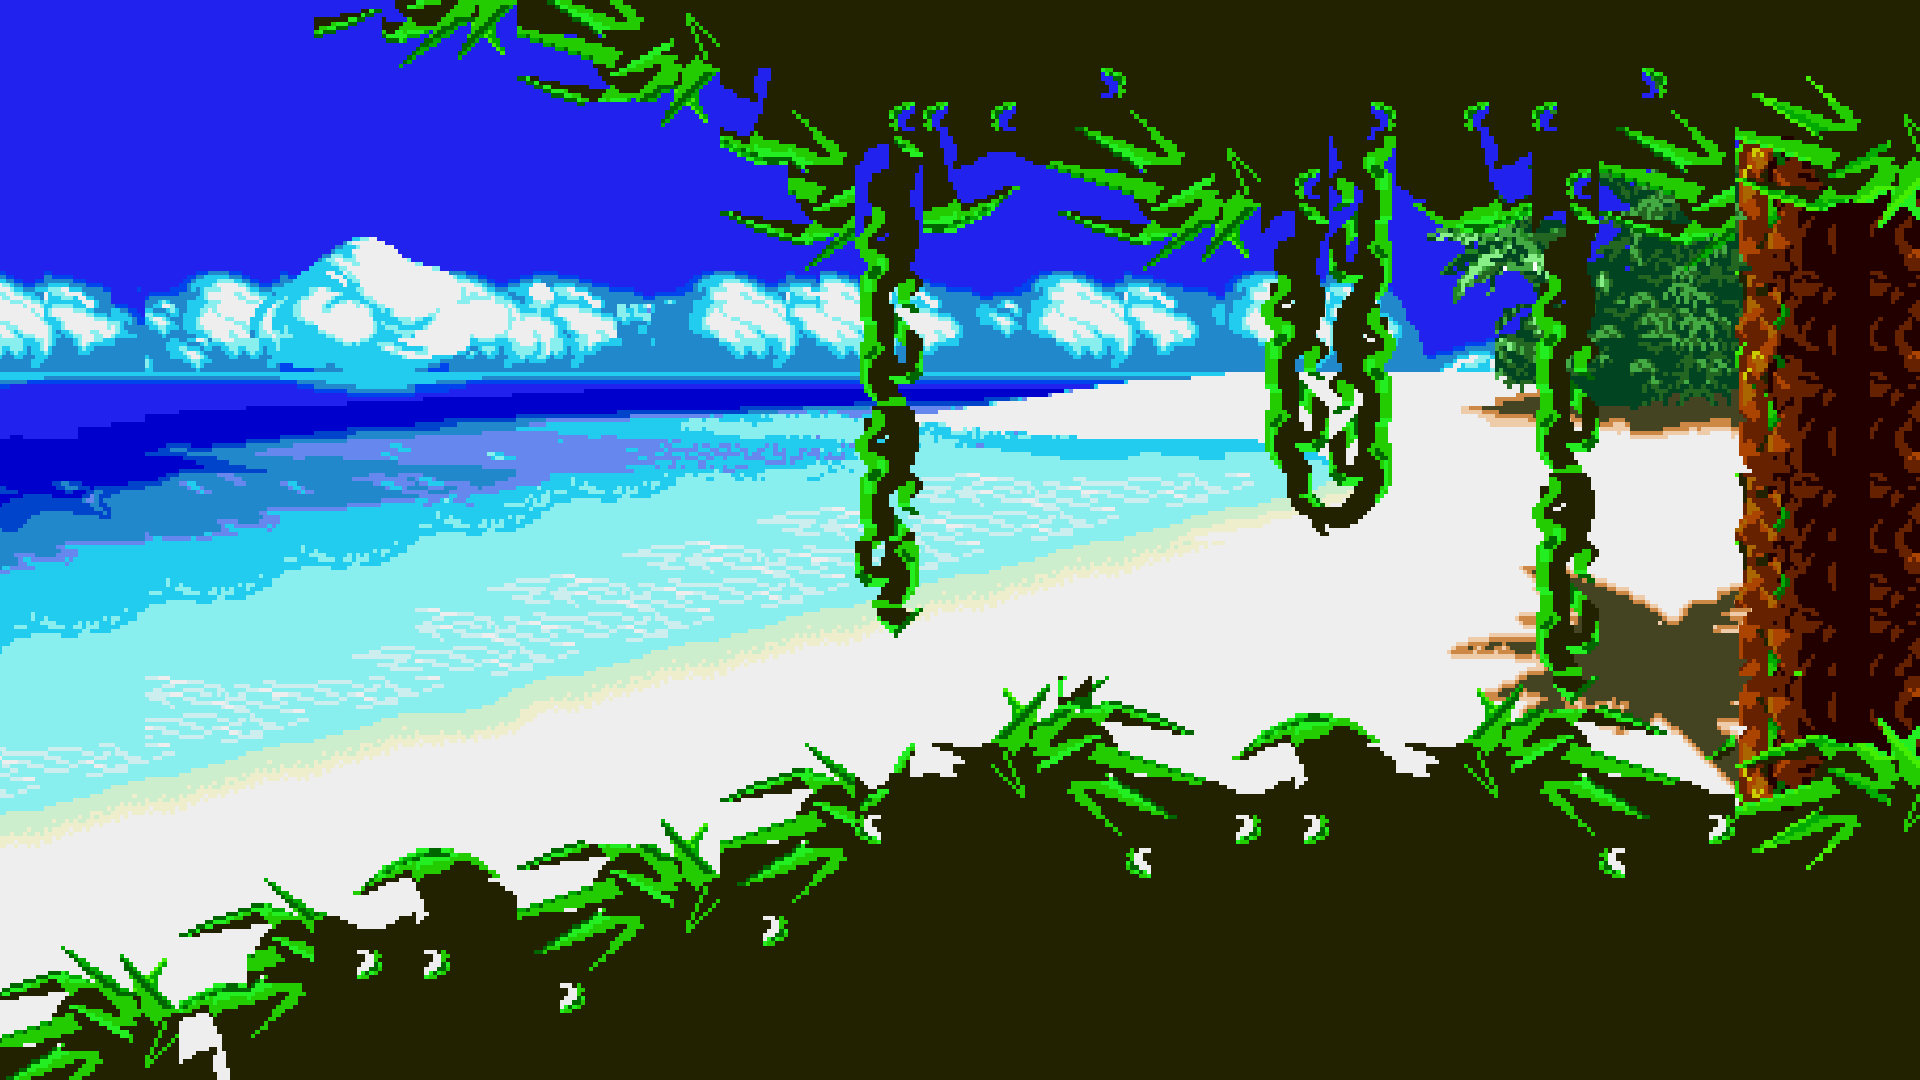 Sonic 3 island